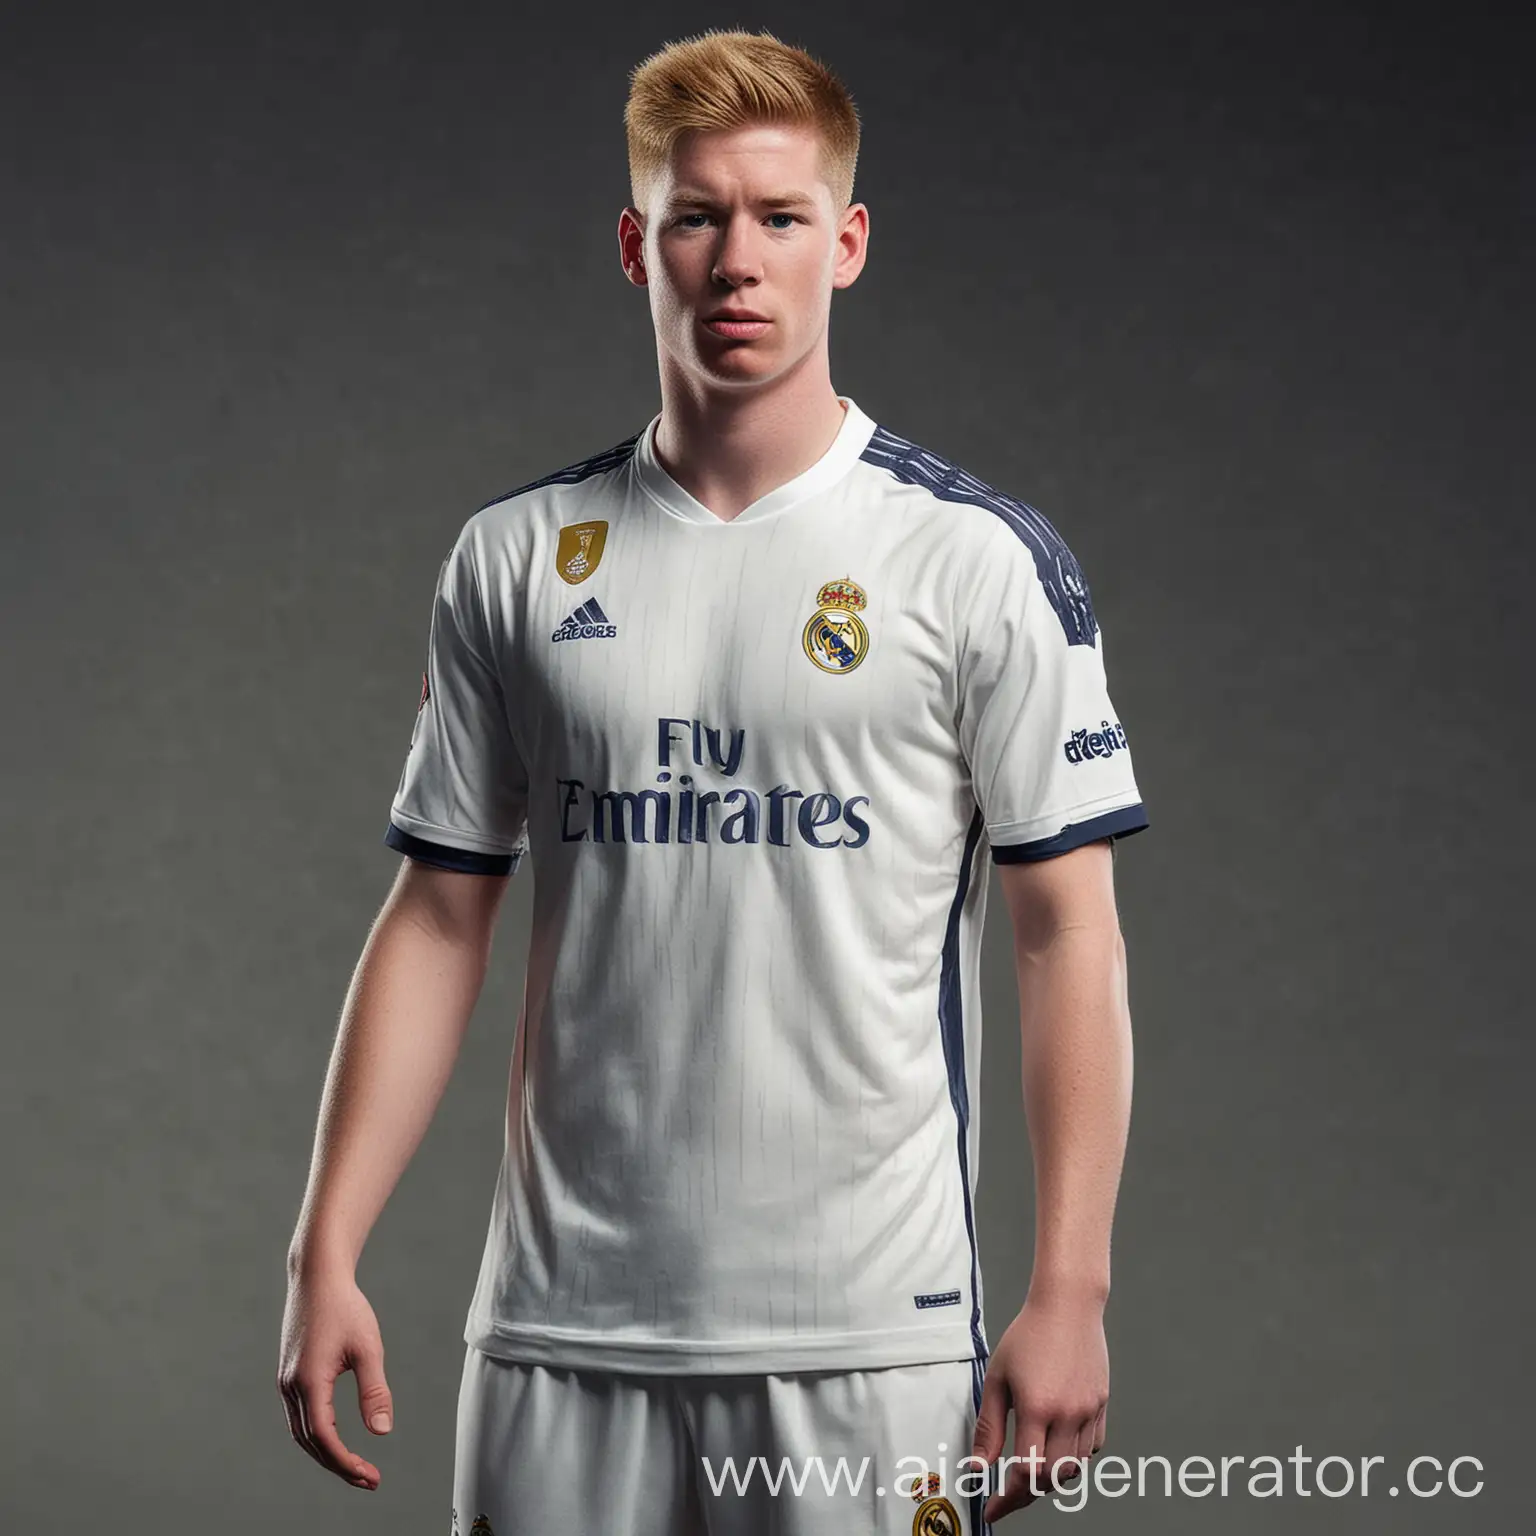 Kevin-de-Bruyne-in-Real-Madrid-Kit-Dynamic-Soccer-Action-Pose